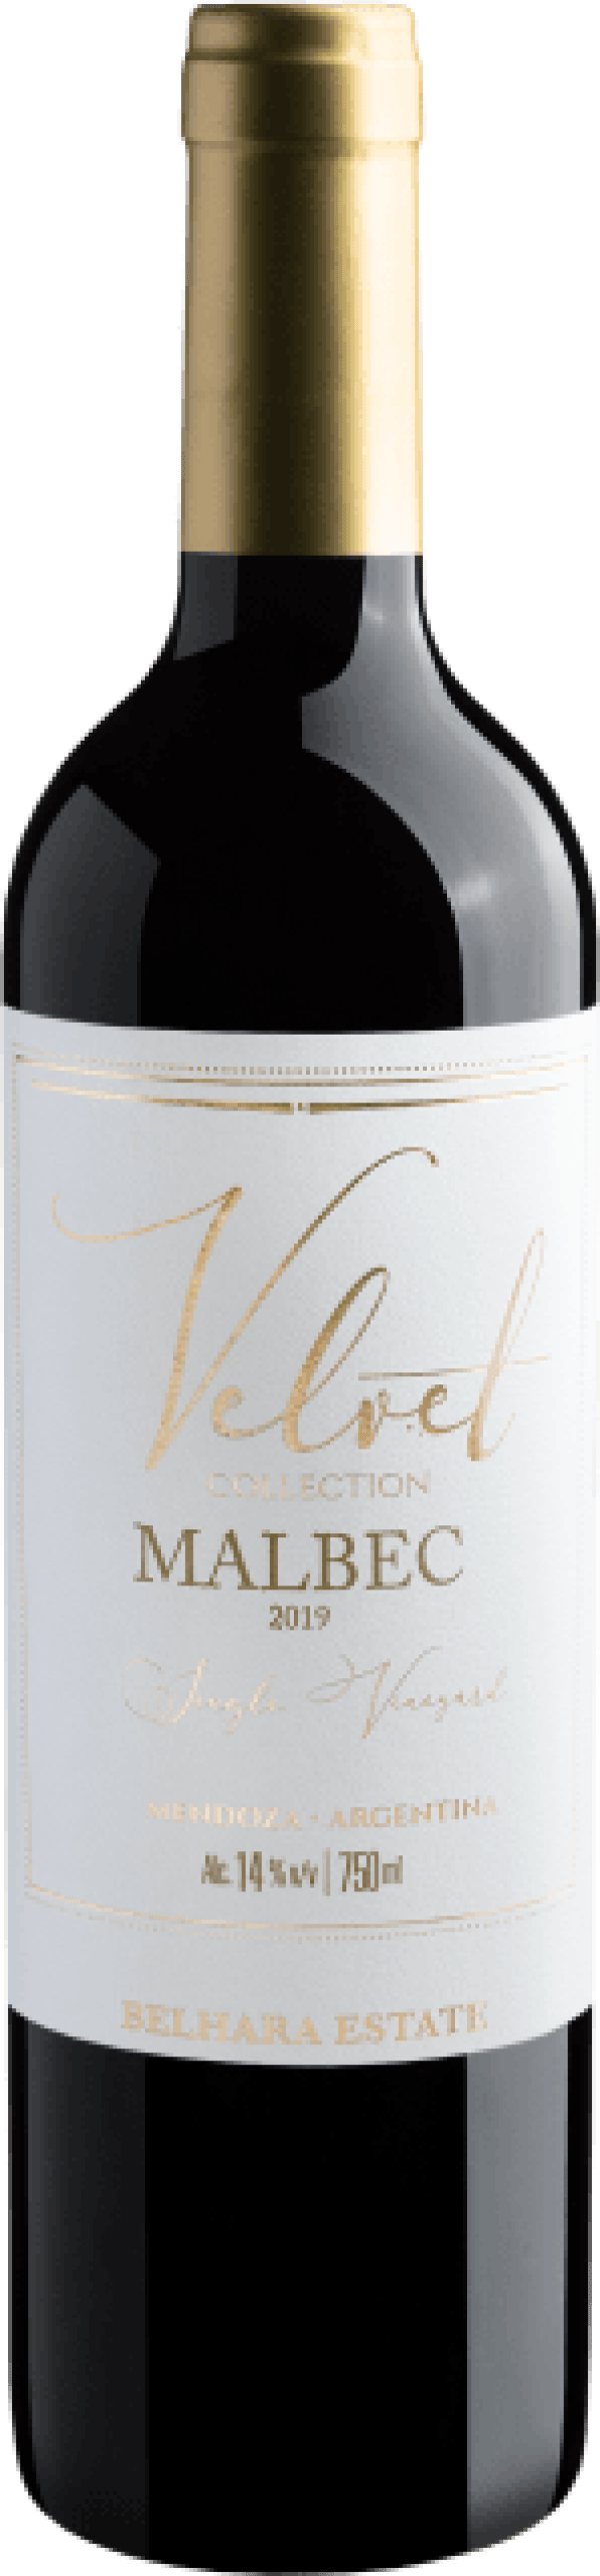 Velvet Collection Single Vineyard Malbec 2019